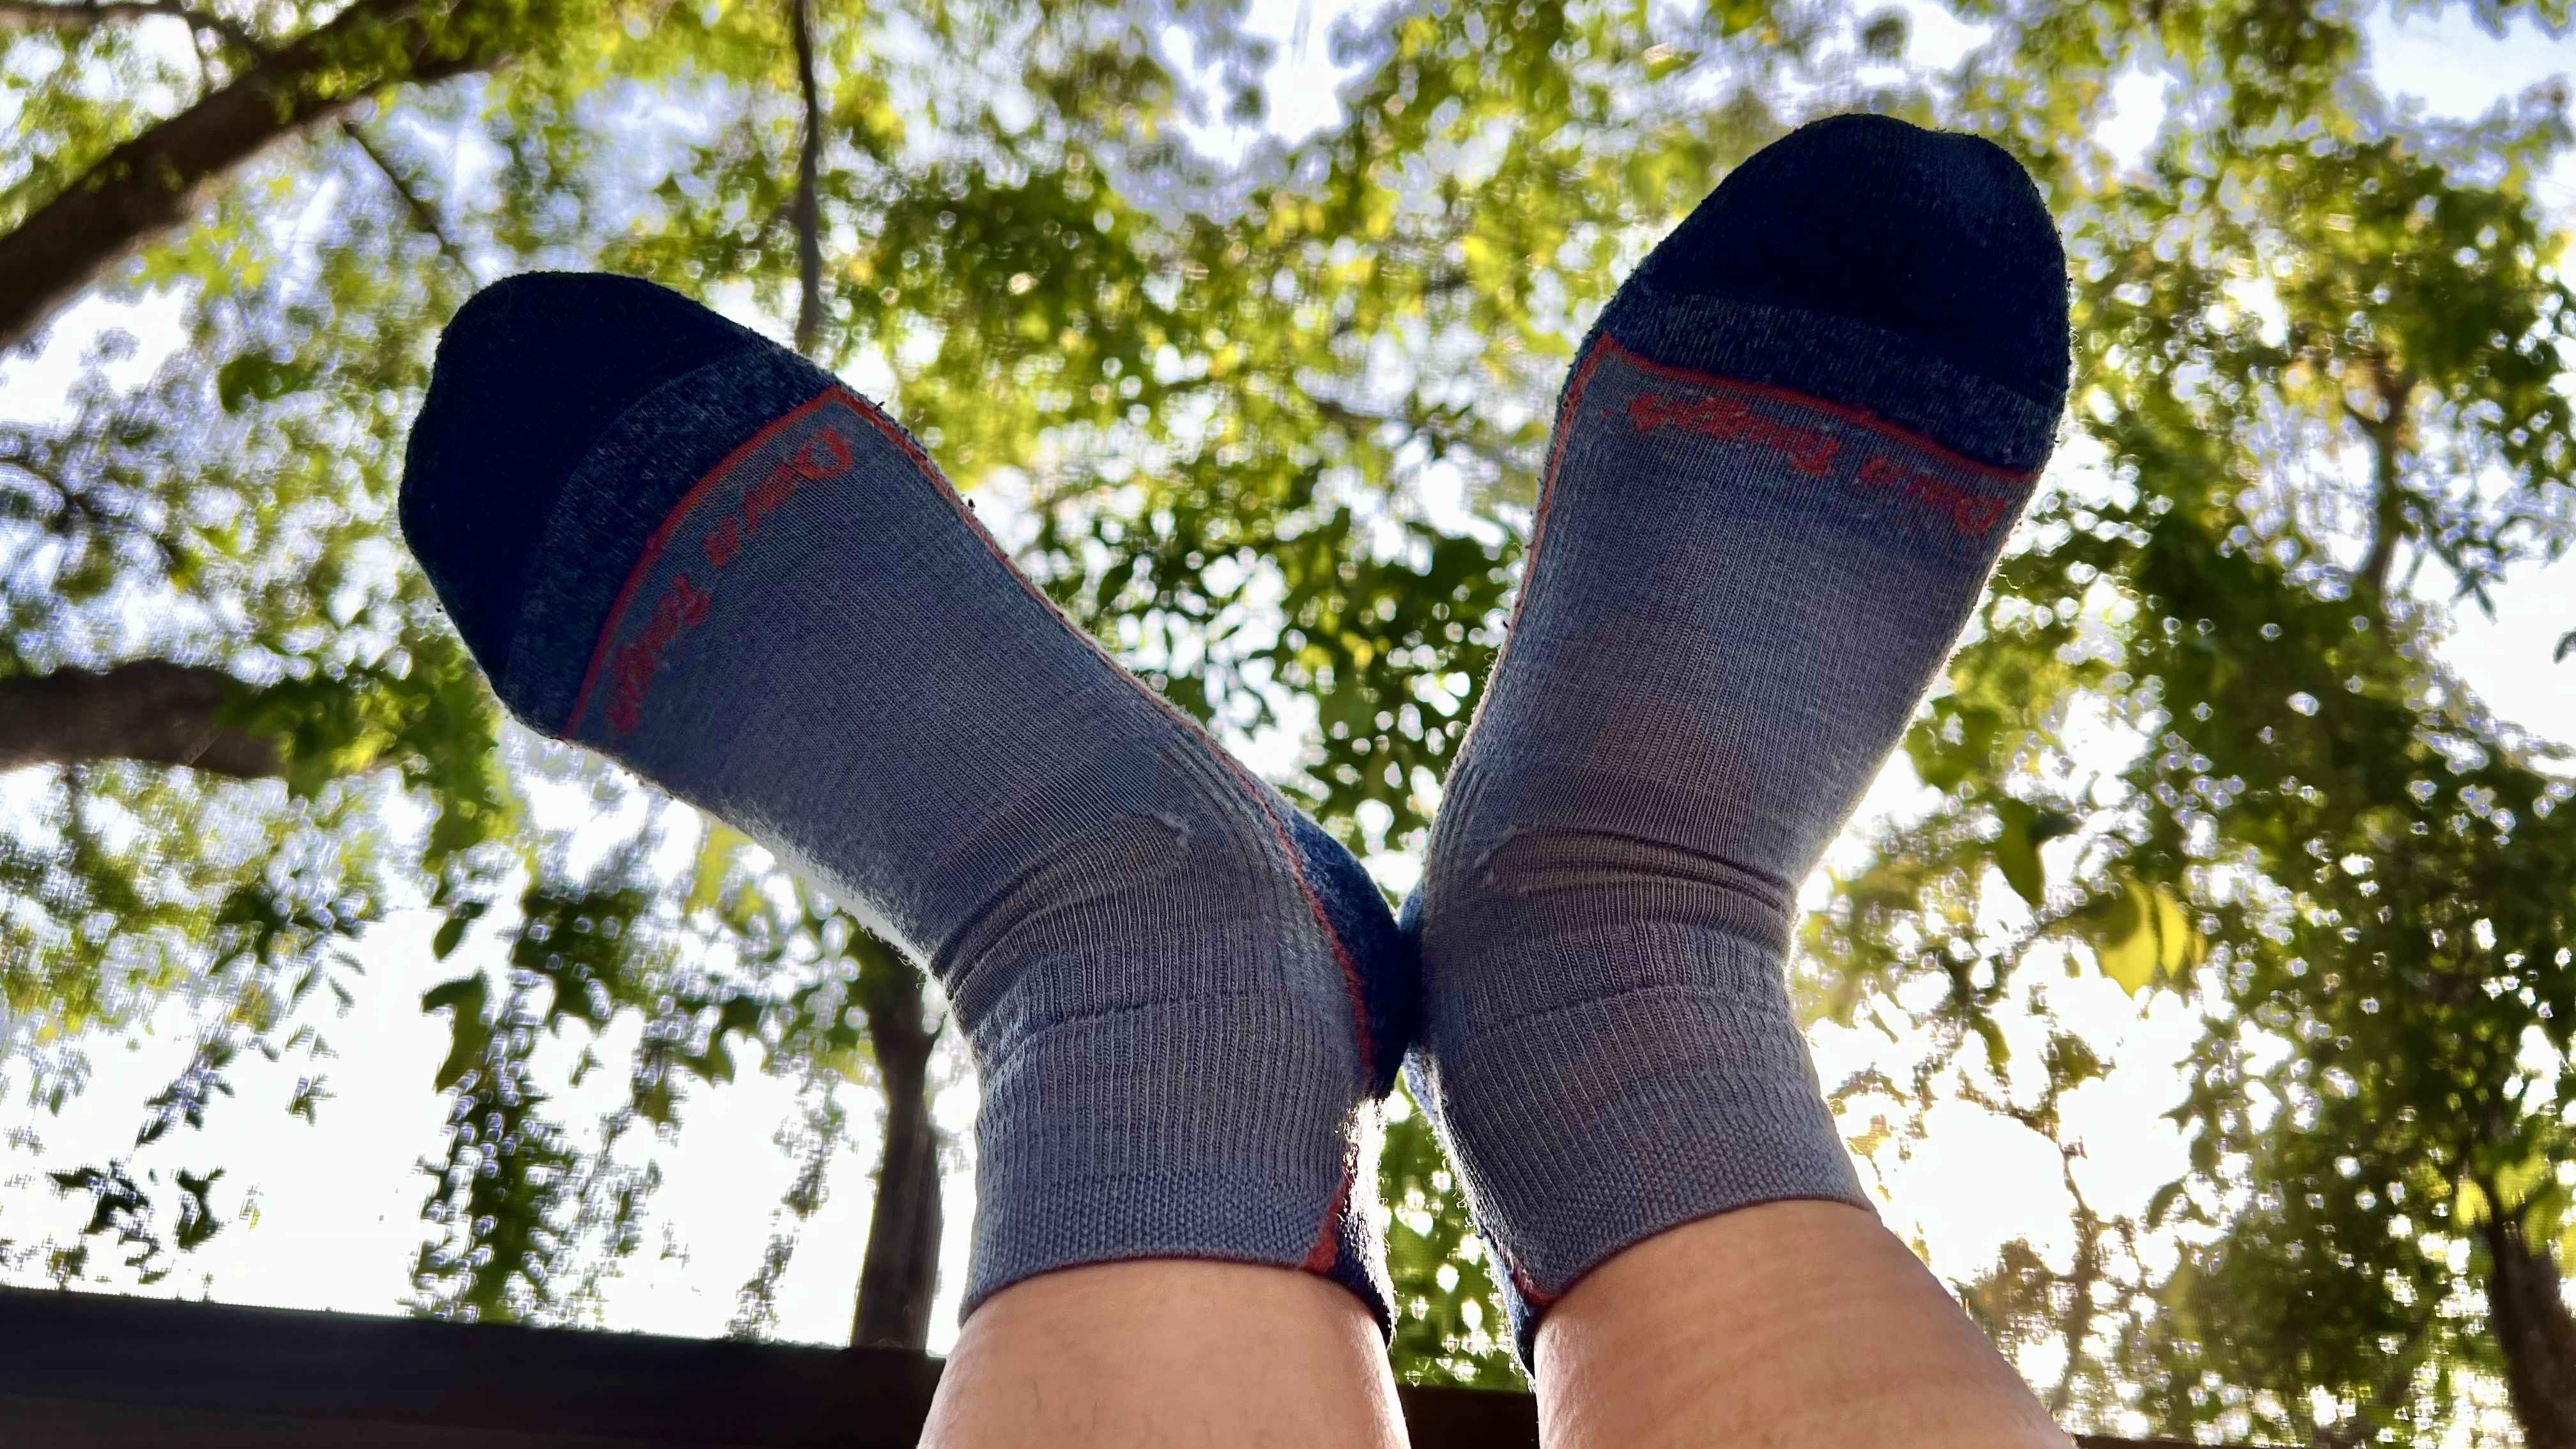 Women's Maximum Cushion Ankle Walking Socks